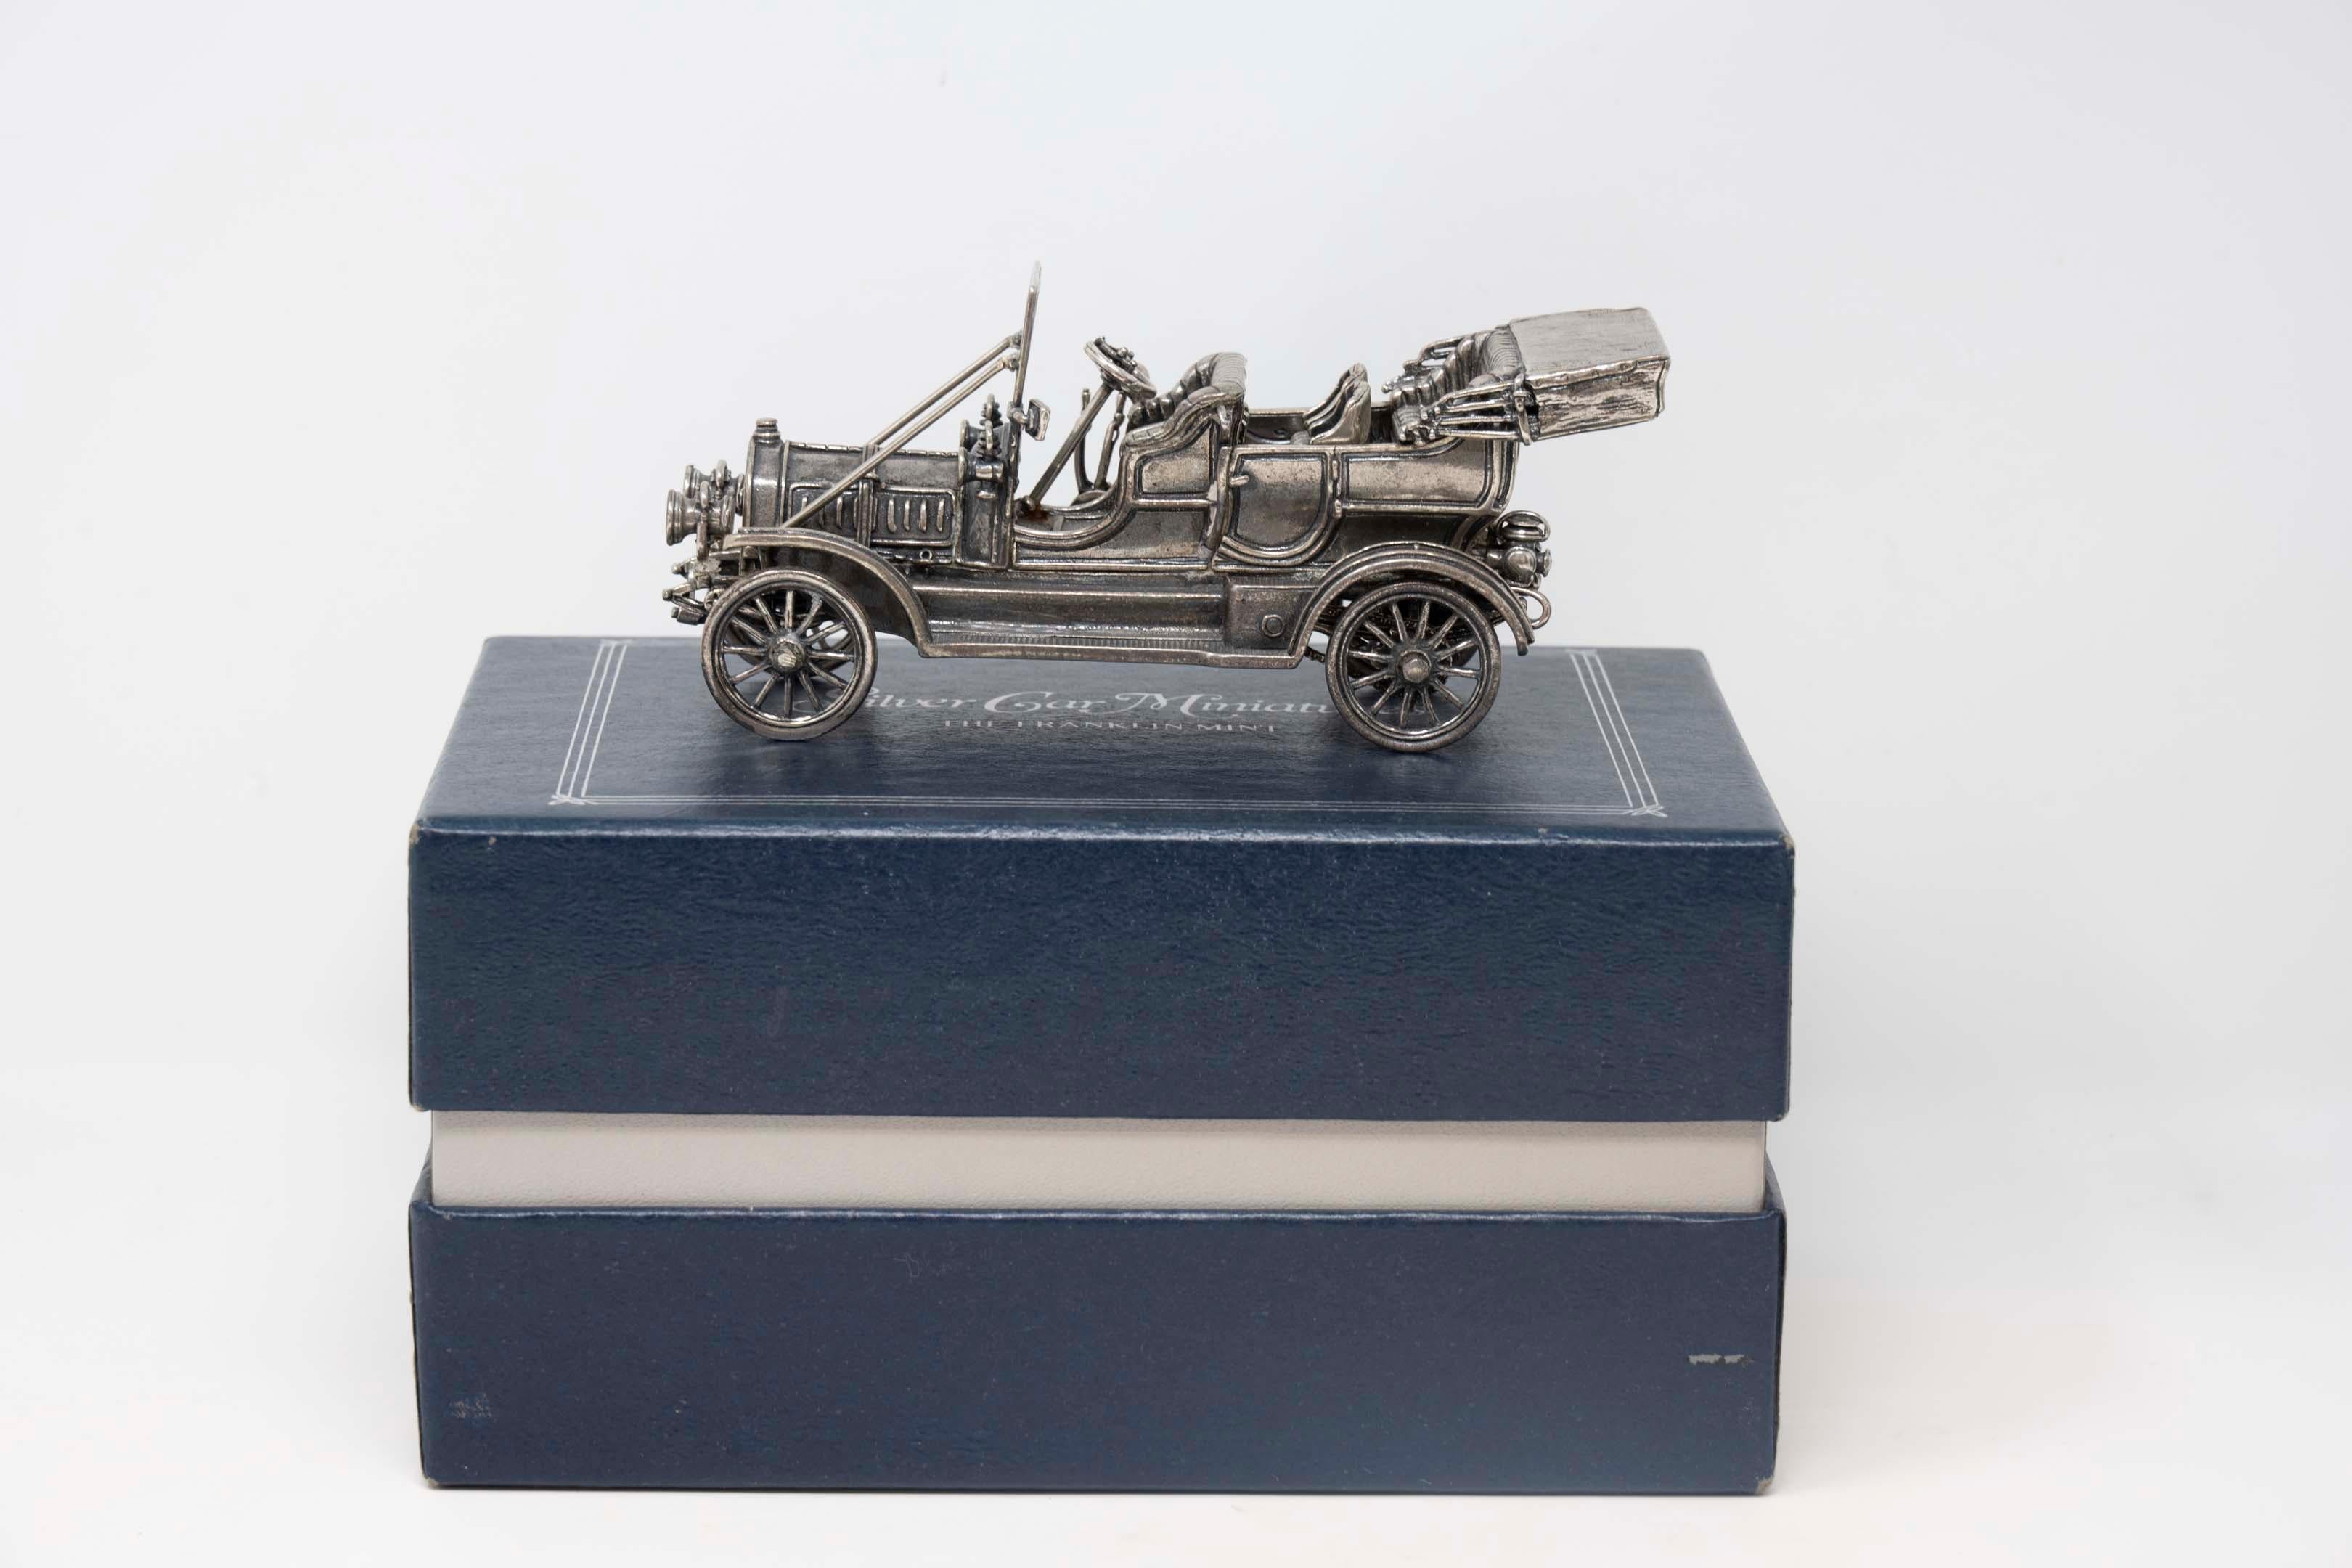 Franklin Mint 1911 Delaunay-Belleville Sterling Silber Miniatur Auto mit Box. Maßnahmen 4 3/4 Zoll lang x 2 1/4 Zoll hoch 1 1/2 Zoll breit. Hergestellt in den Jahren 1970-80, gestempelt. Wiegt 229,3 Gramm, in gutem Zustand.
